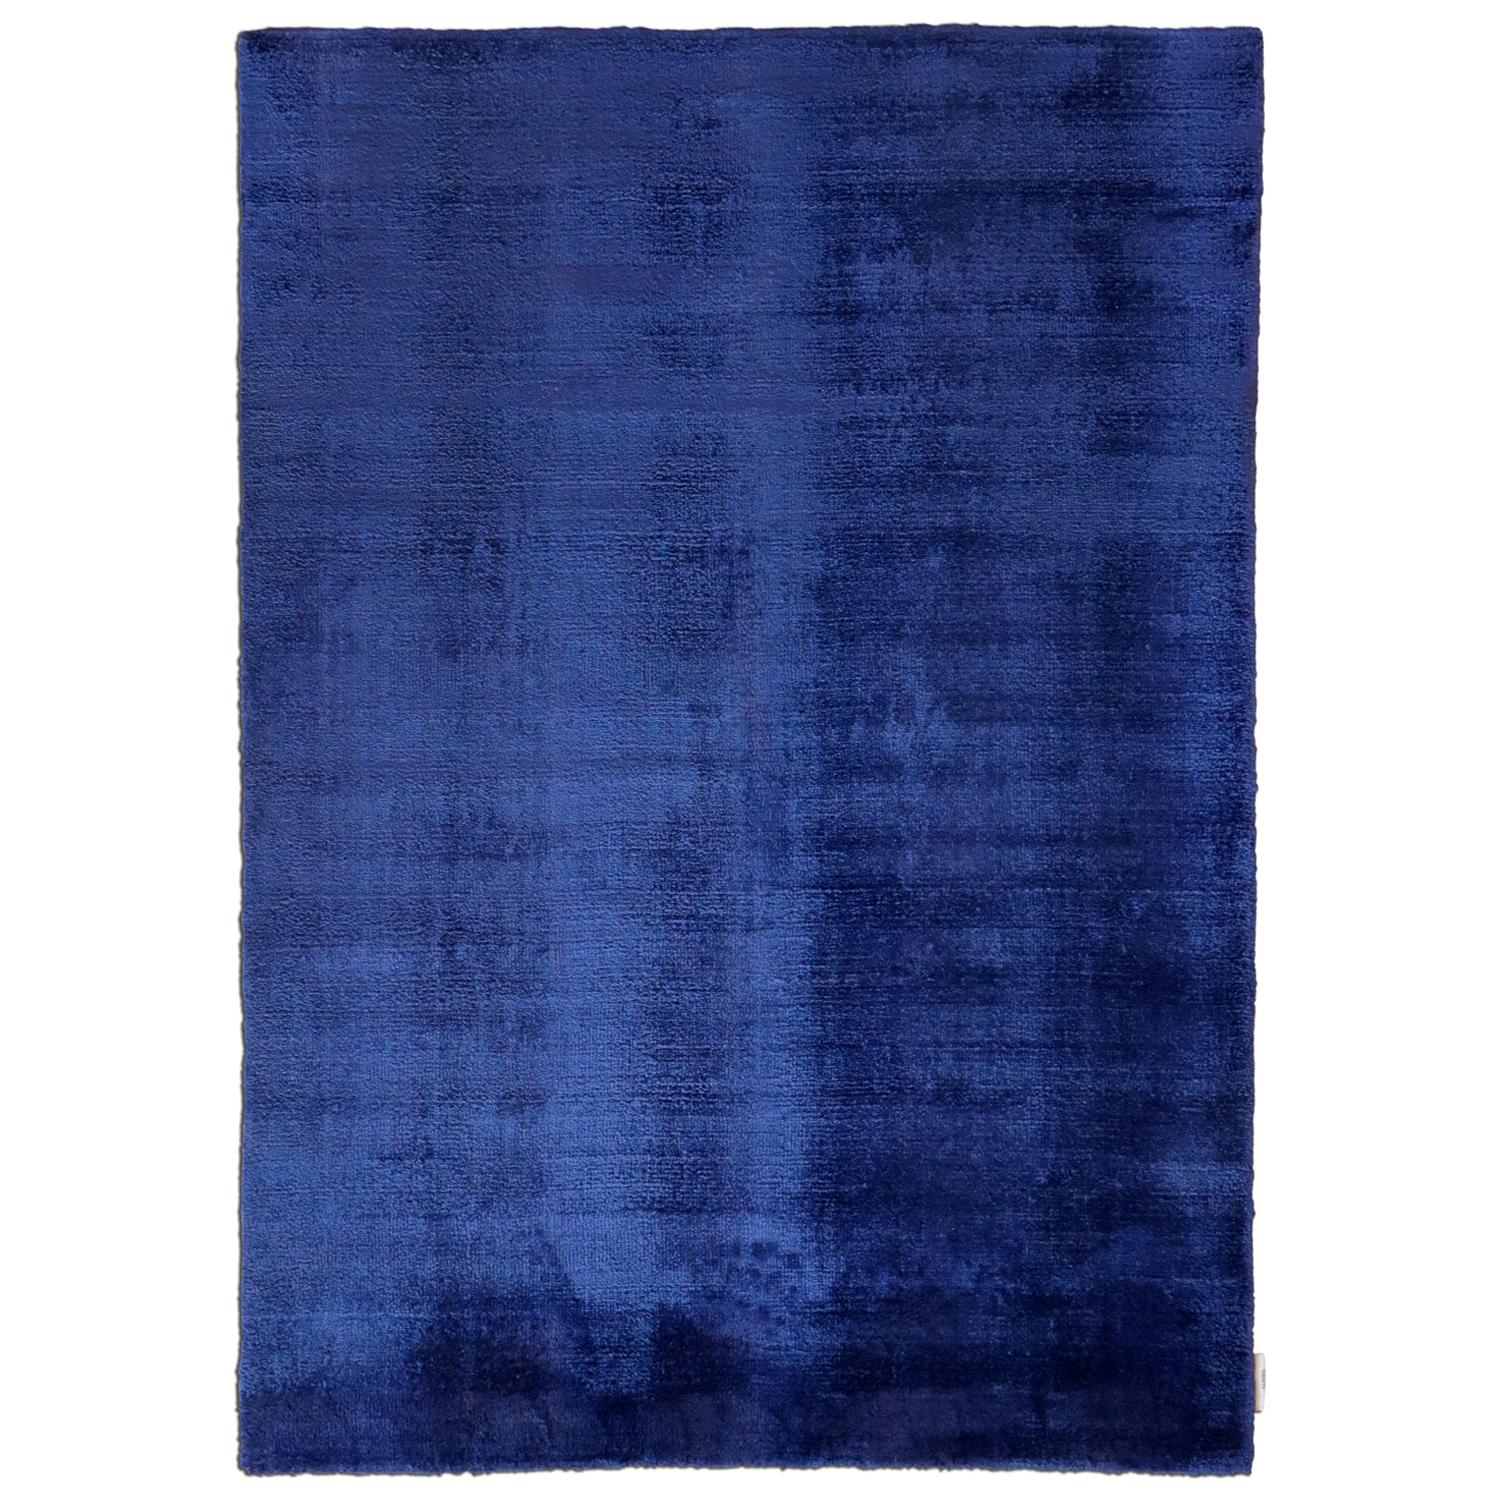 Contemporary Deep Blue Soft Shiny Silky Rug by Deanna Comellini 250x350 cm For Sale